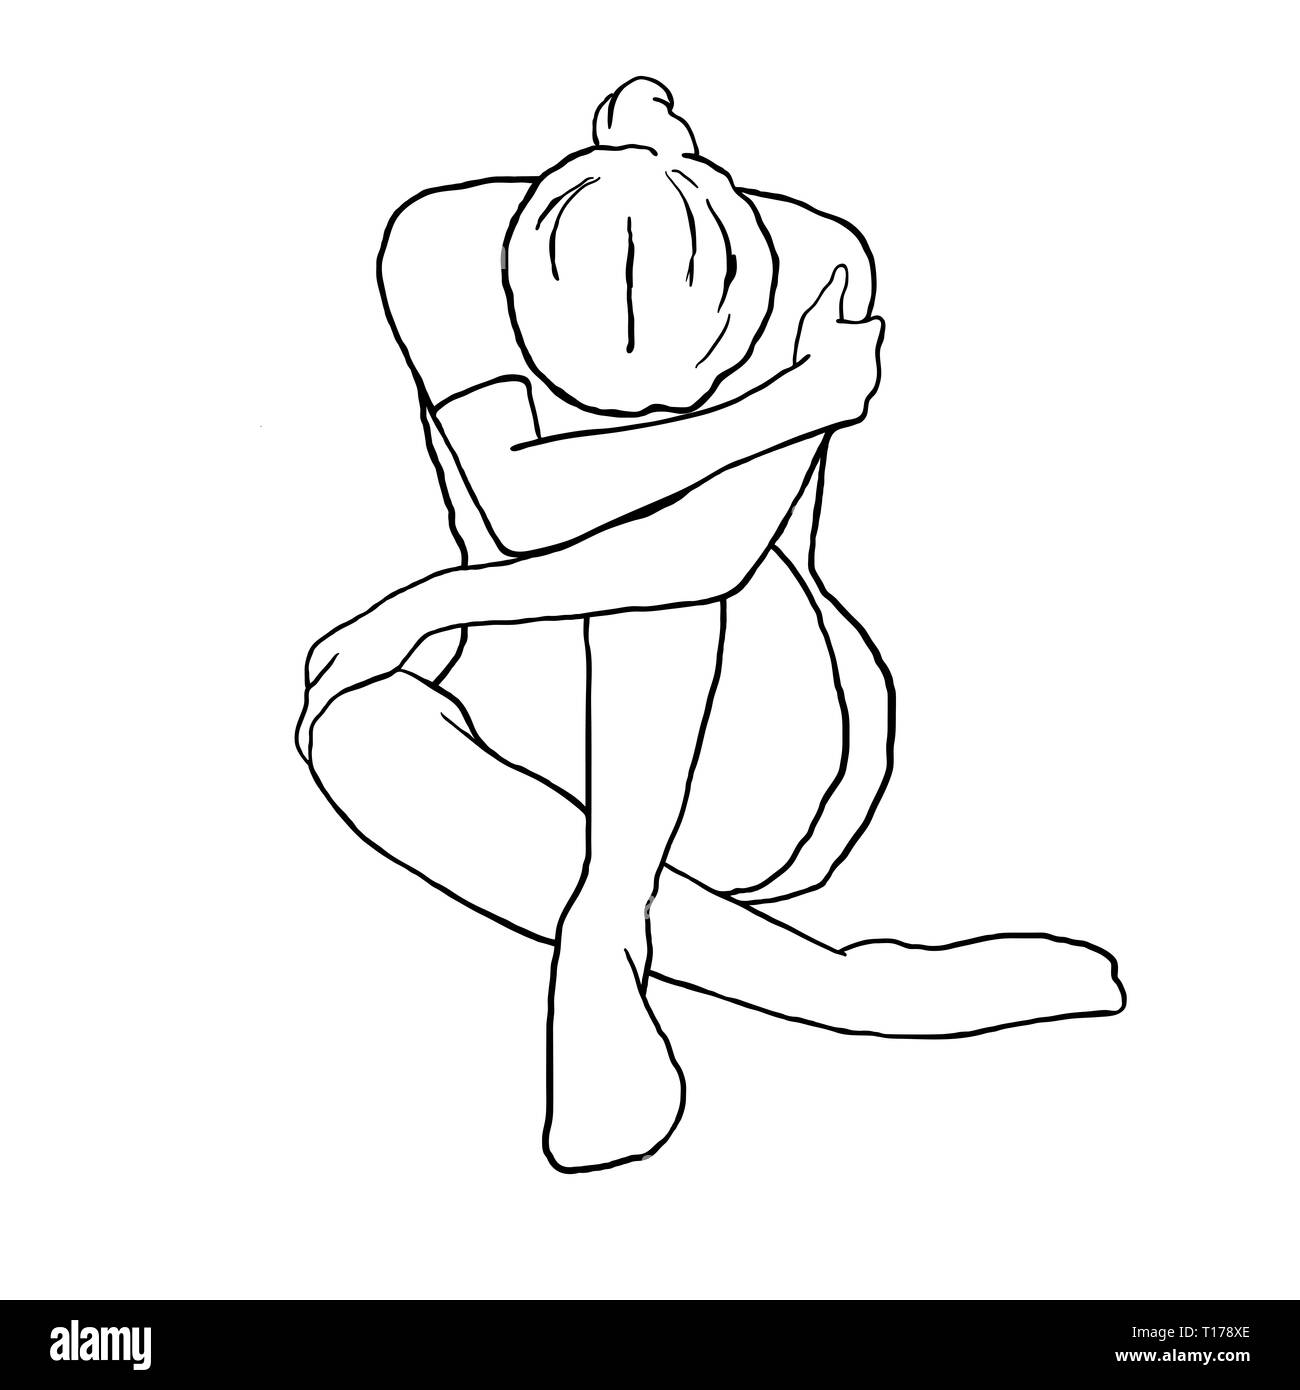 Sad girl / illustration/ hand drawn Stock Photo